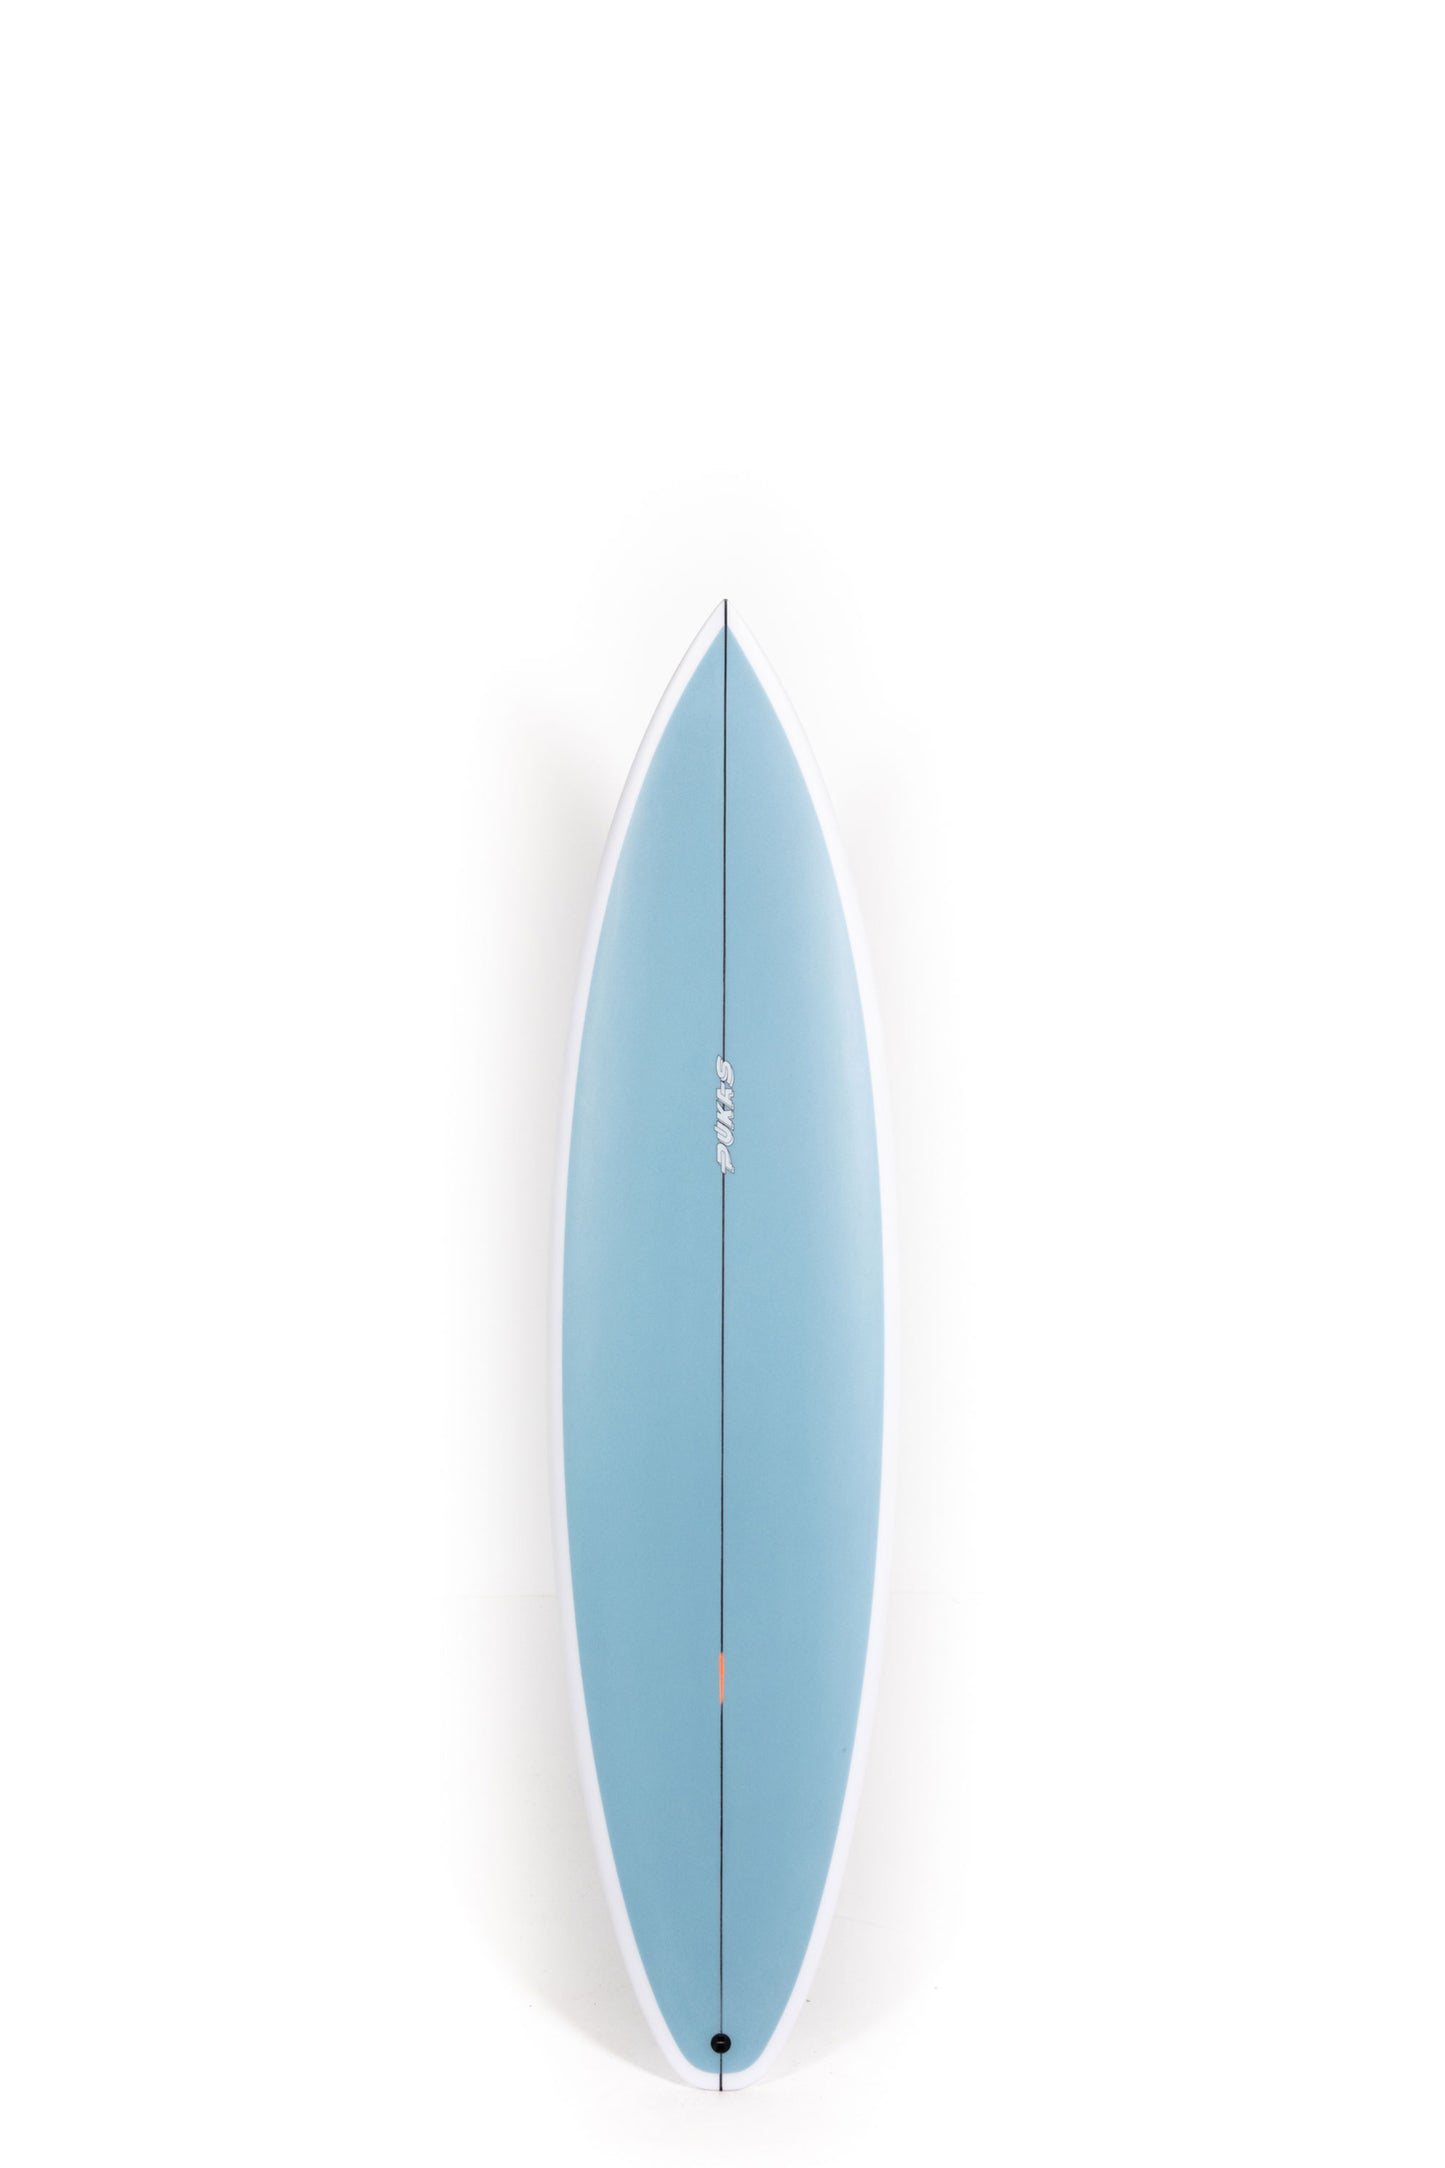 Pukas-Surf-Shop-Pukas-Christenson-Surfboards-Water-lion-Chris-Christenson-6_6